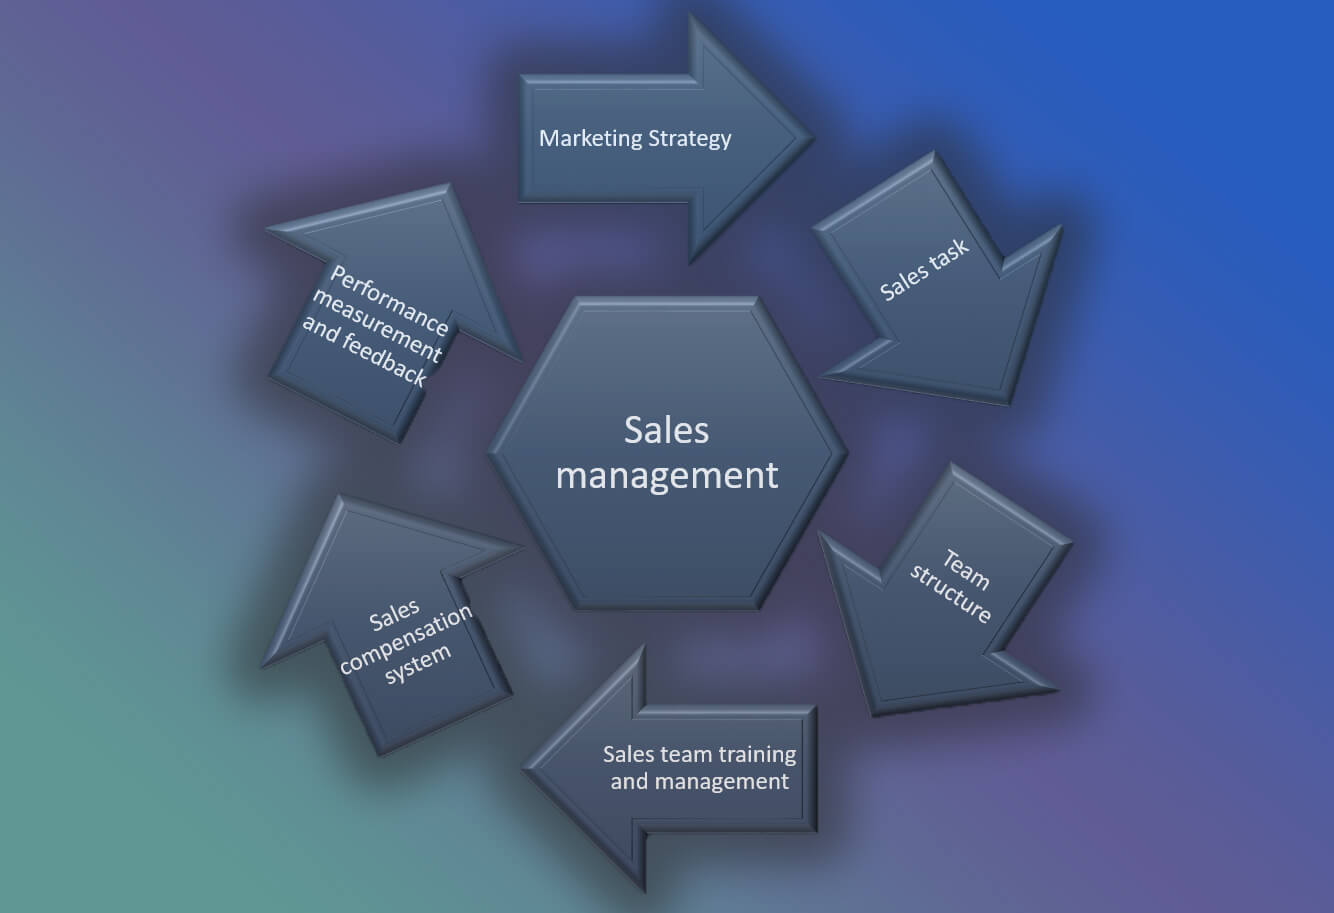 Sales Management Cycle